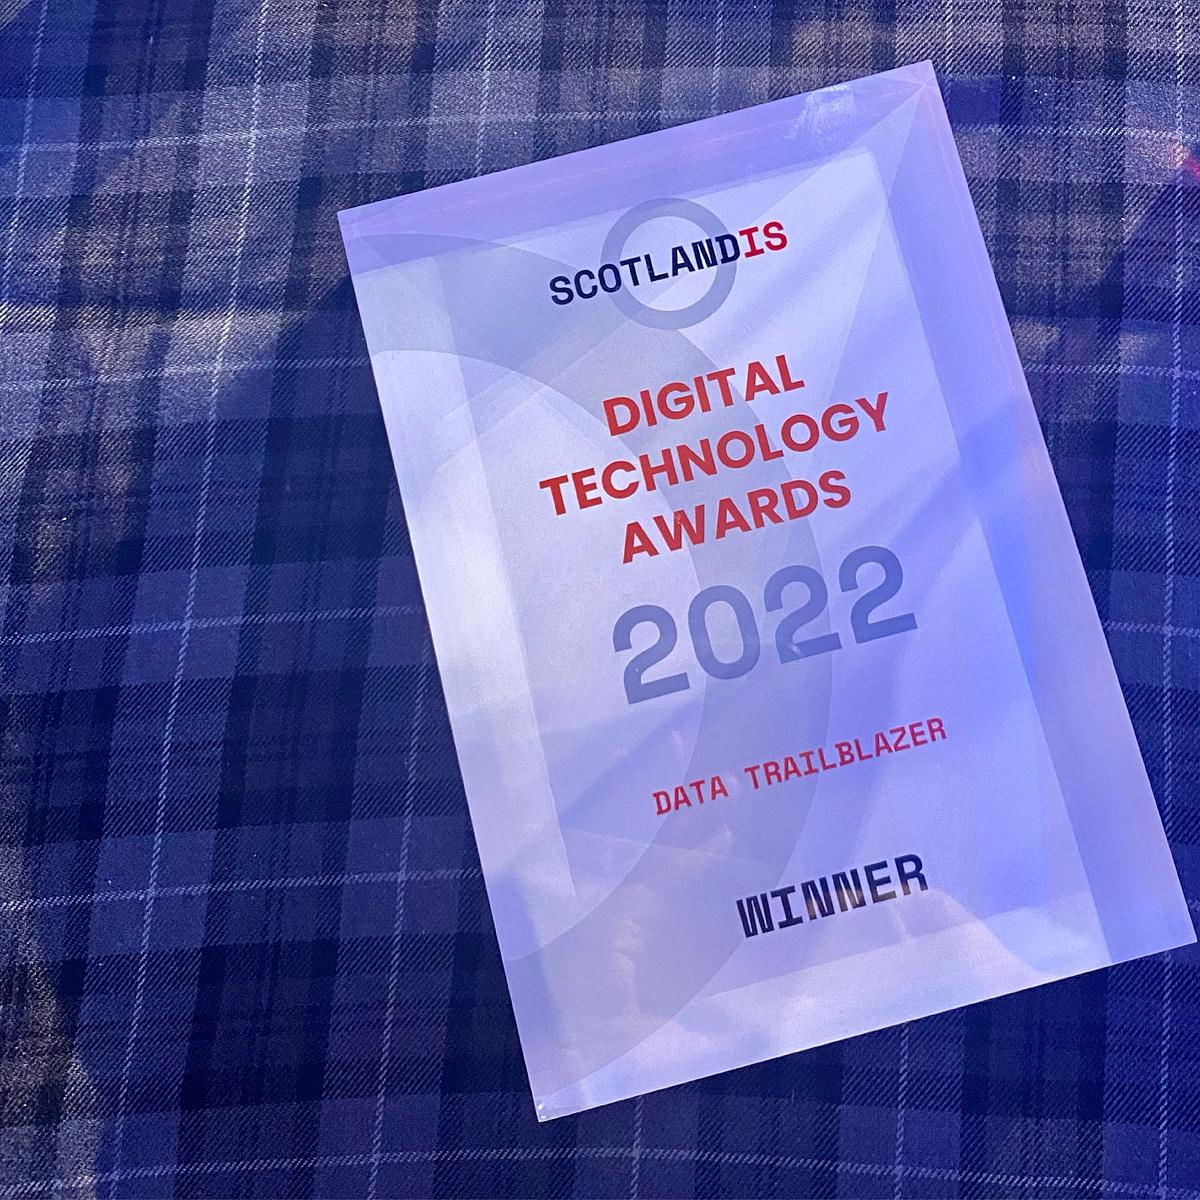 Farrpoint Wins Trailblazer Award At The Digital Technology Awards 2022 Farrpoint